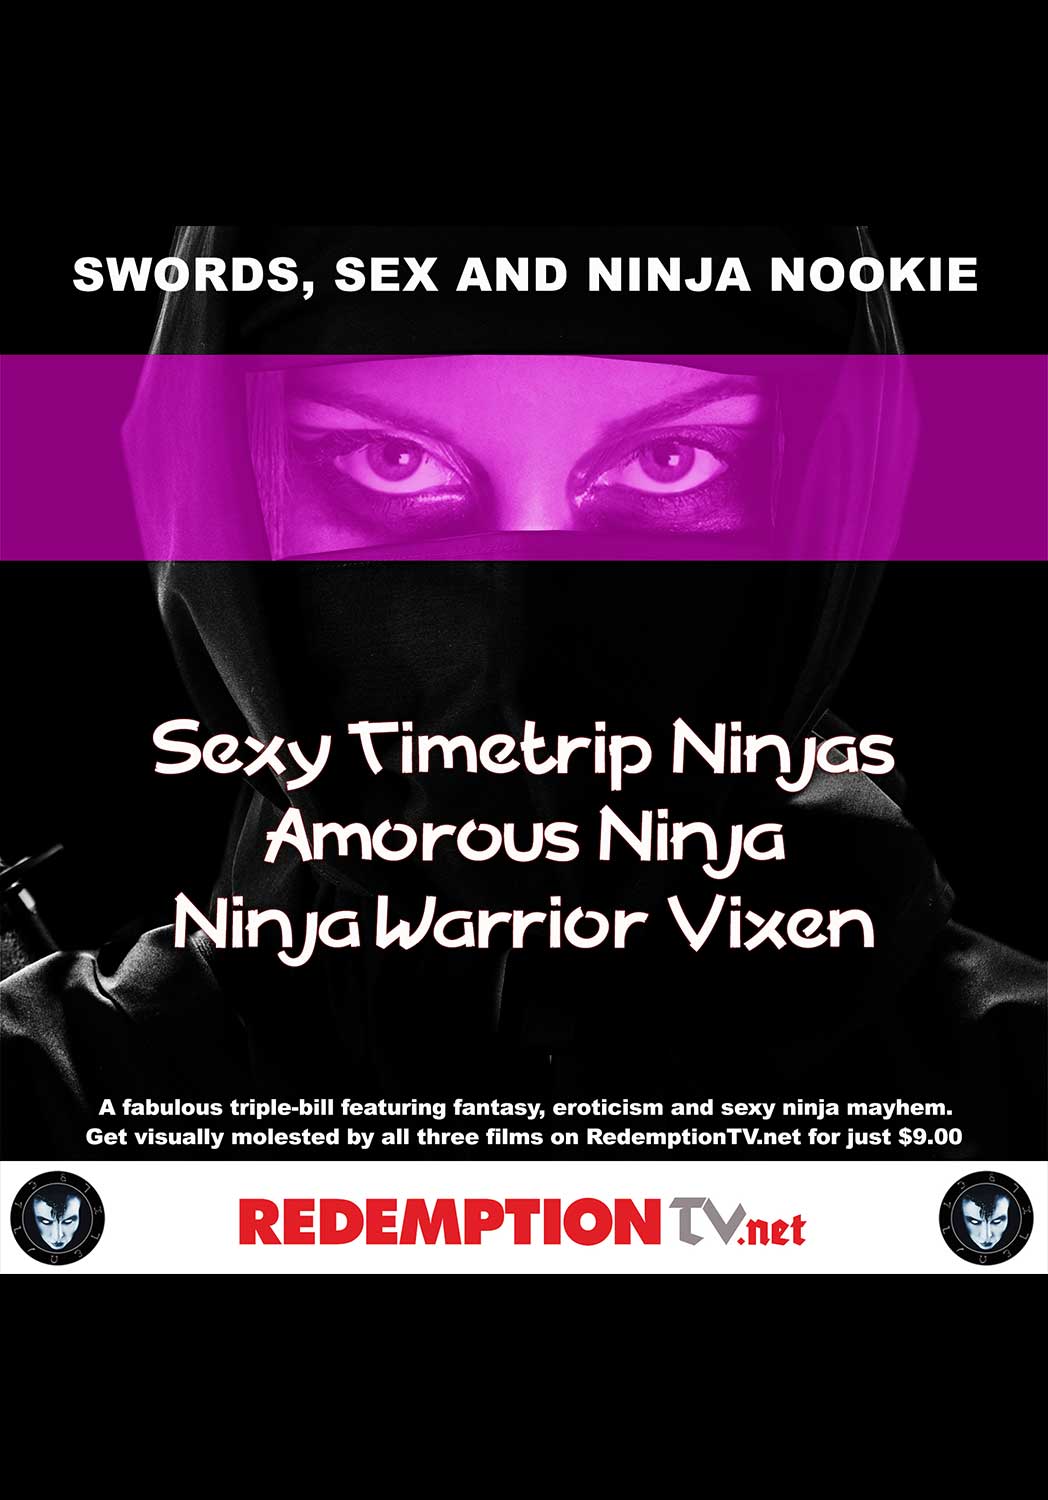 A fabulous triple-bill featuring fantasy, eroticism and sexy ninja mayhem